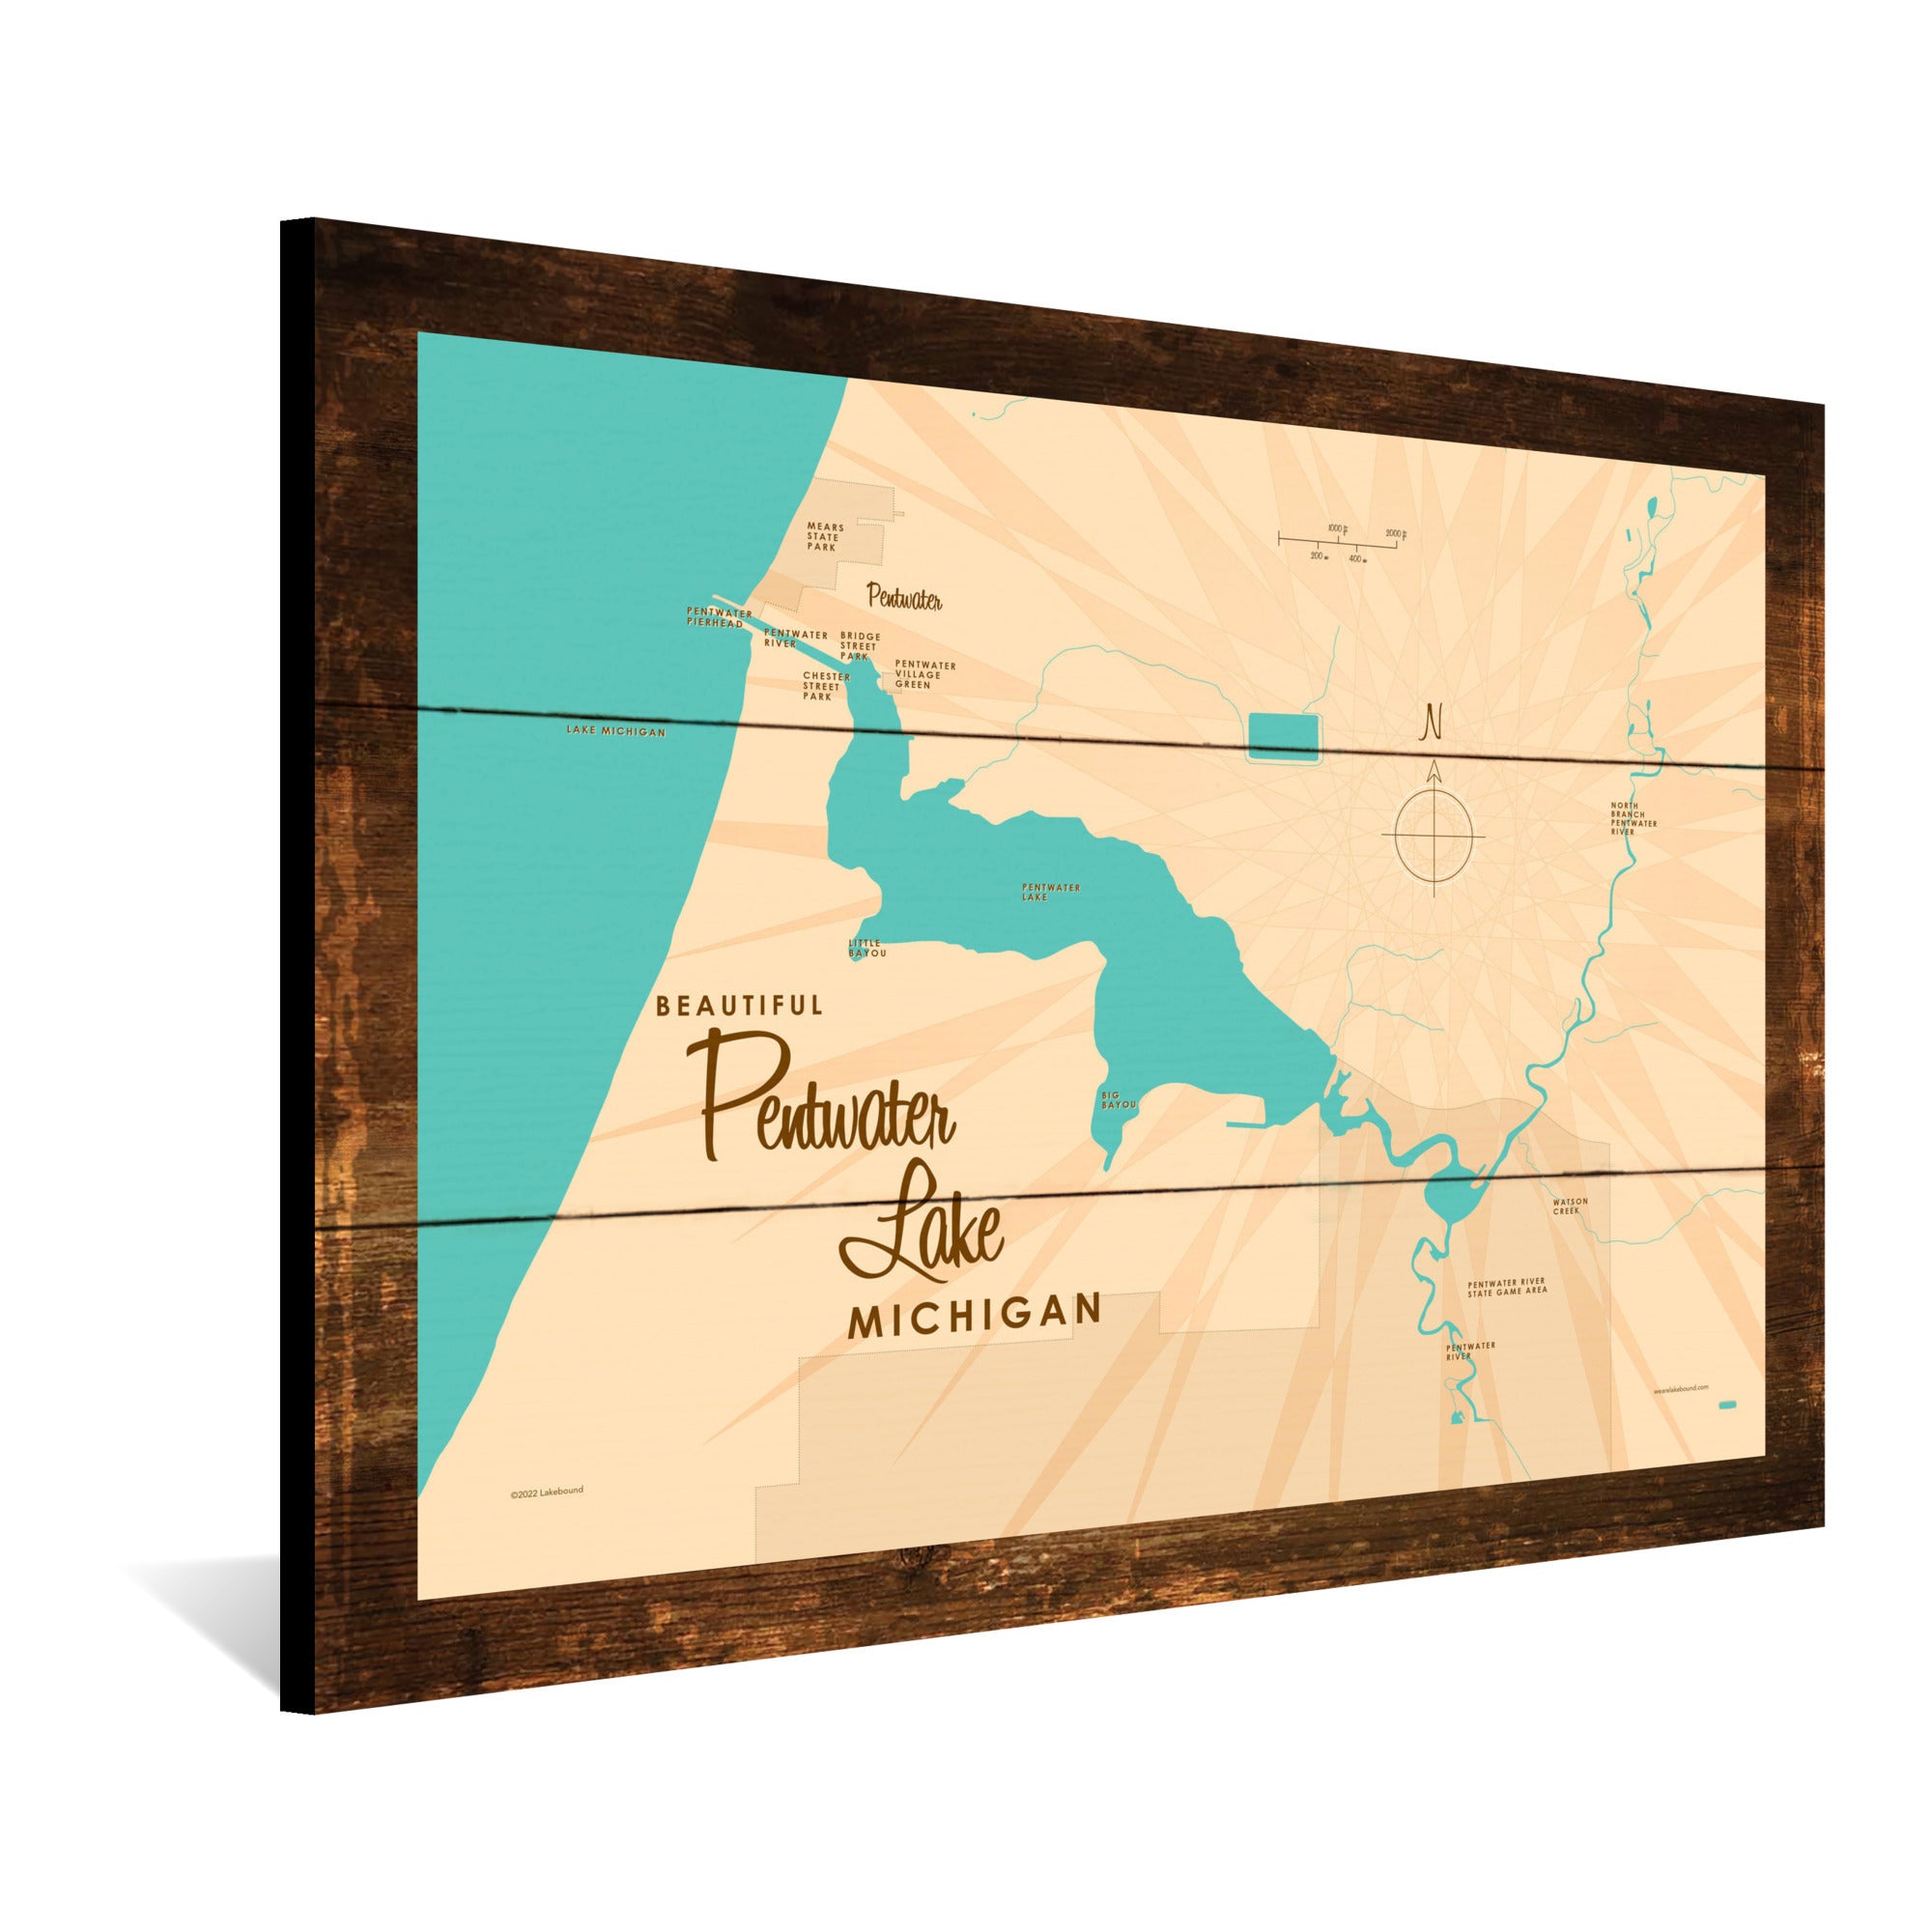 Pentwater Lake Michigan, Rustic Wood Sign Map Art